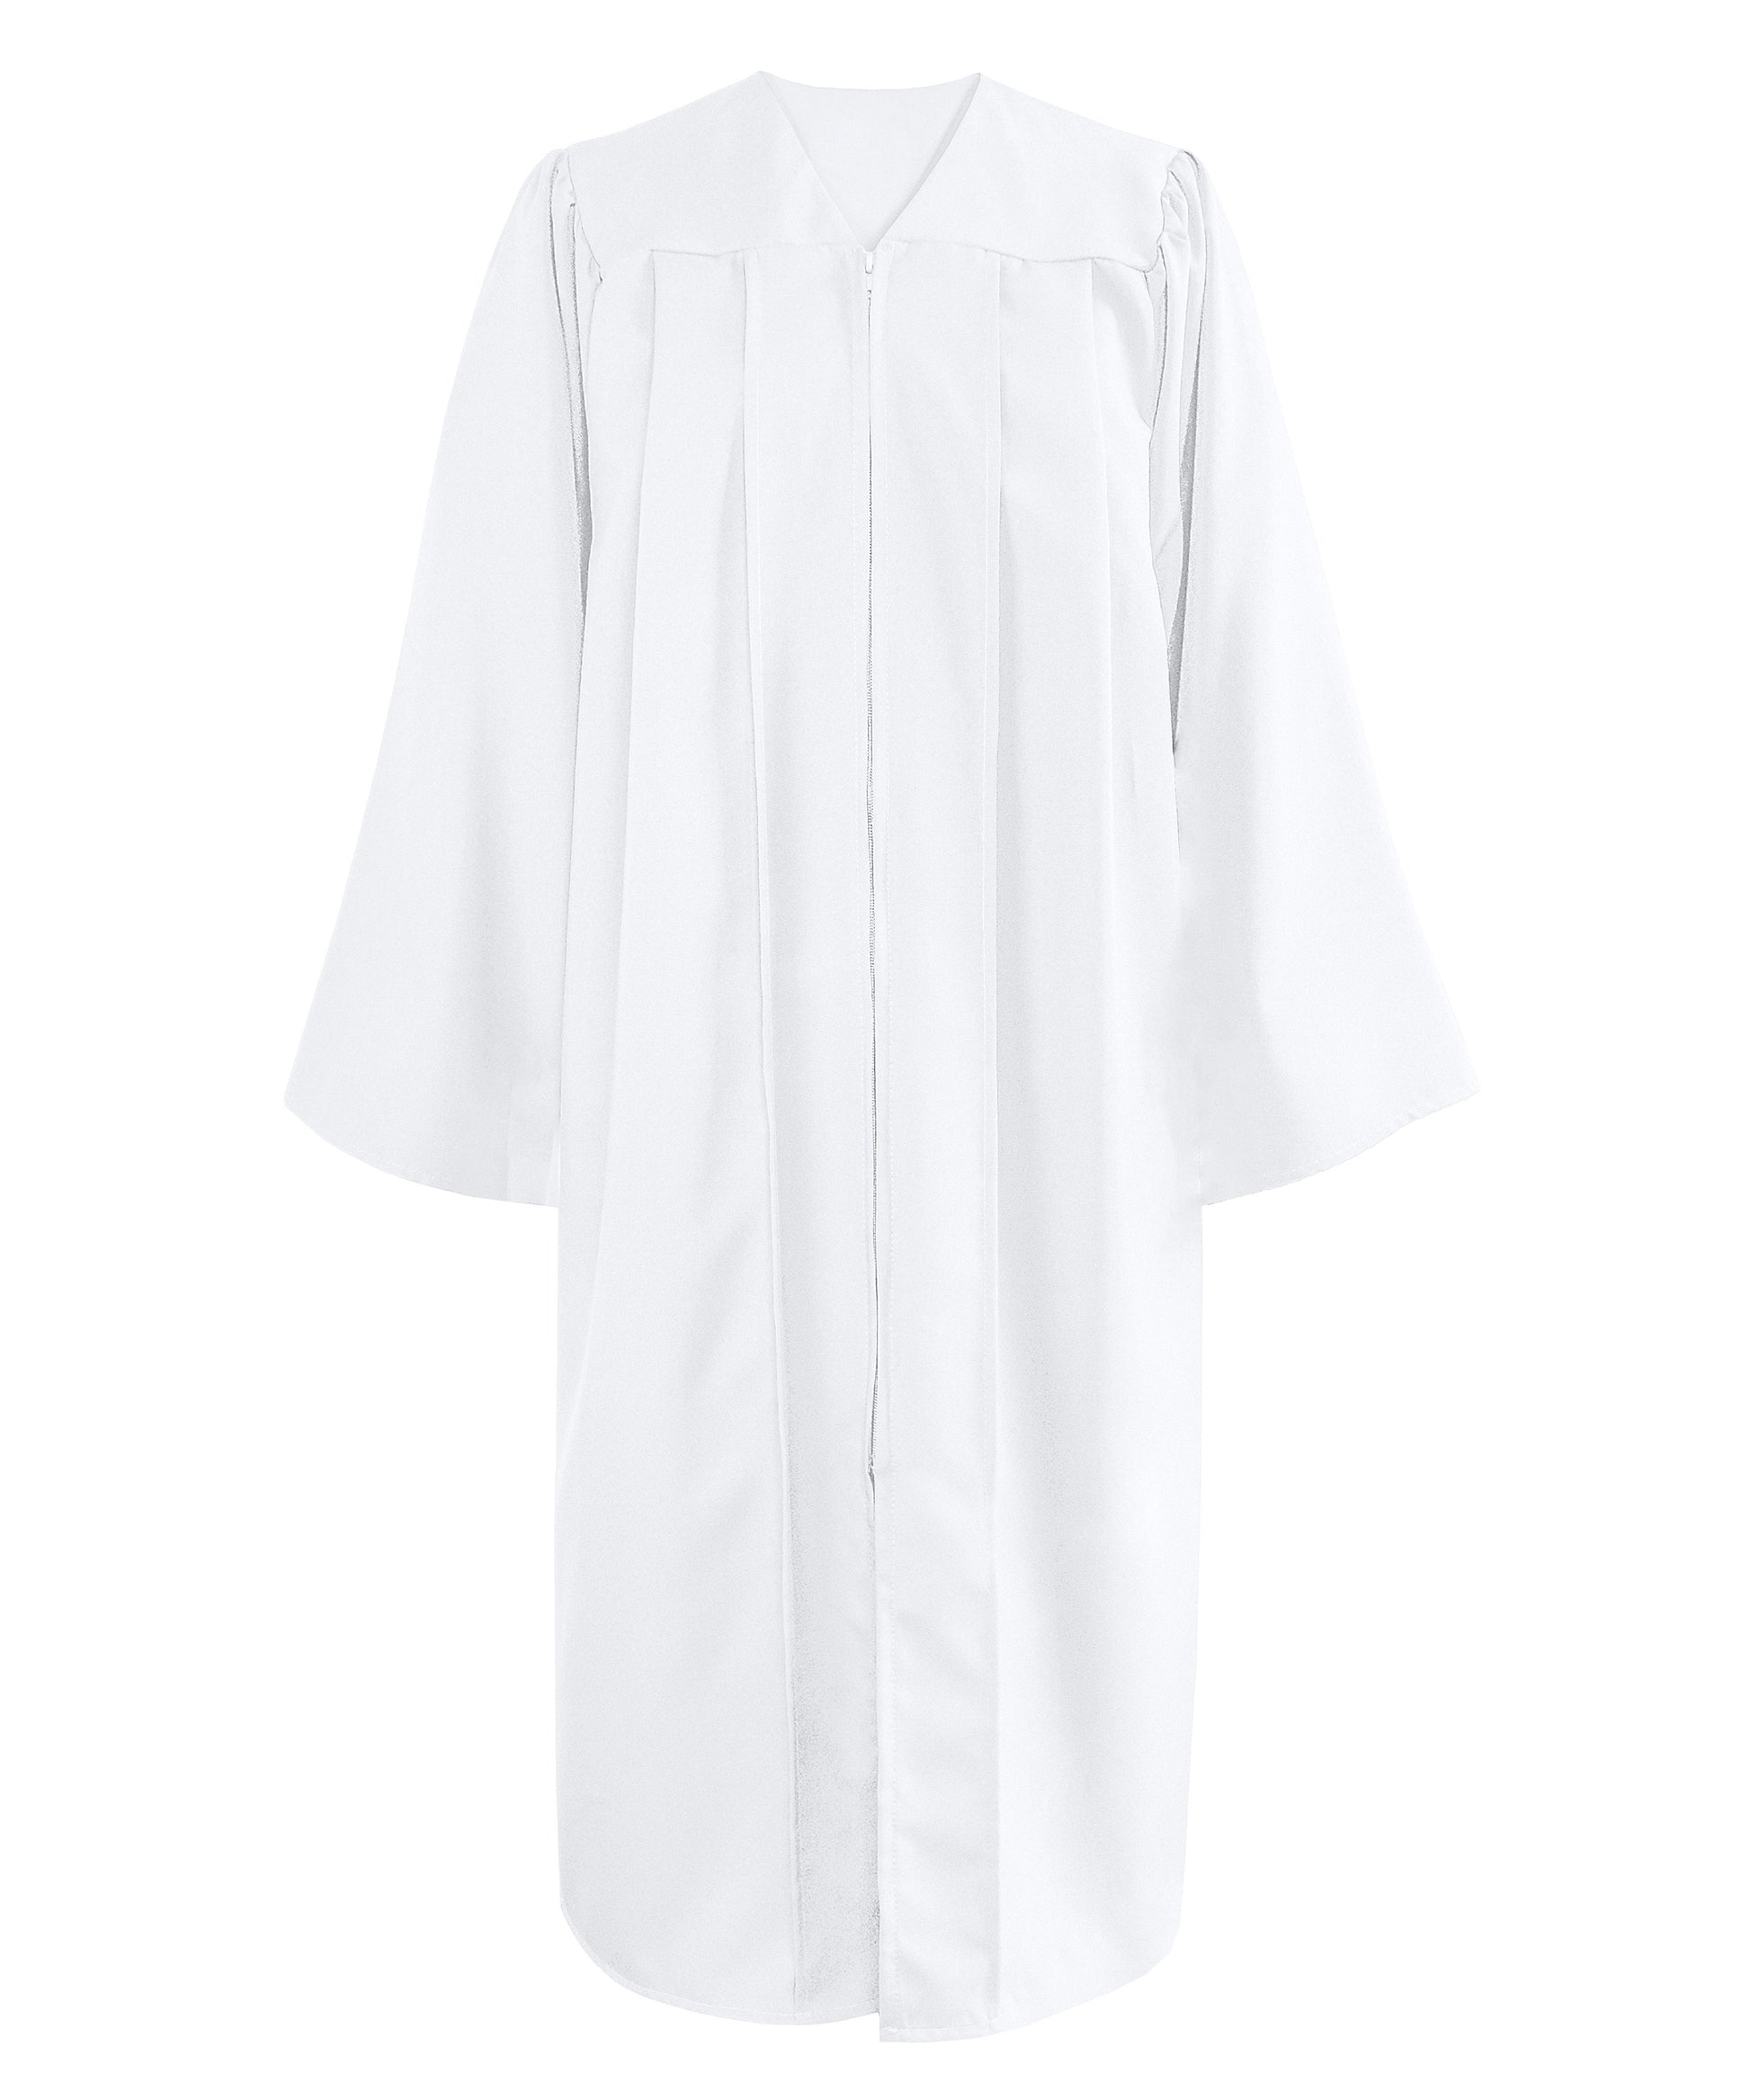 Choir Robe for Church | Matte Graduation Gown for School | Baptism Confirmation Choir Costume-CA graduation